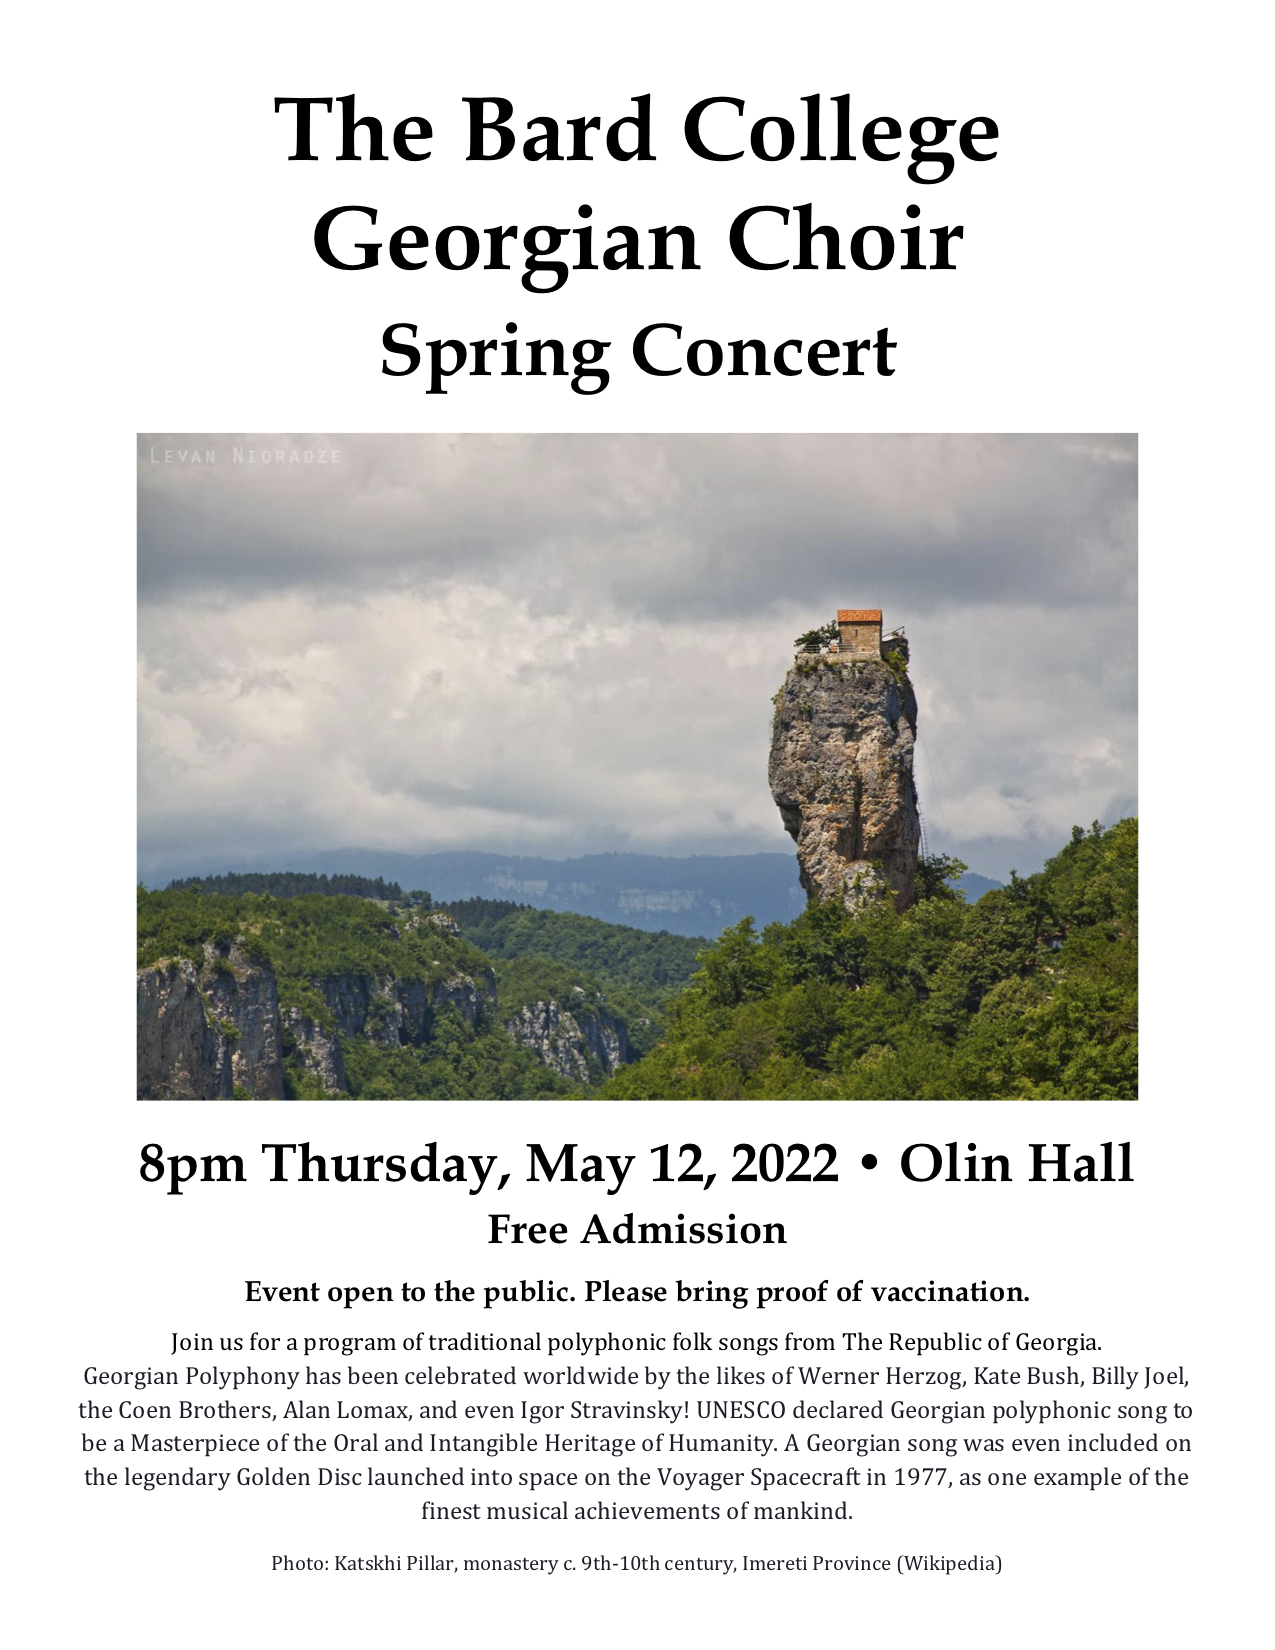 Georgian Choir Spring Concert